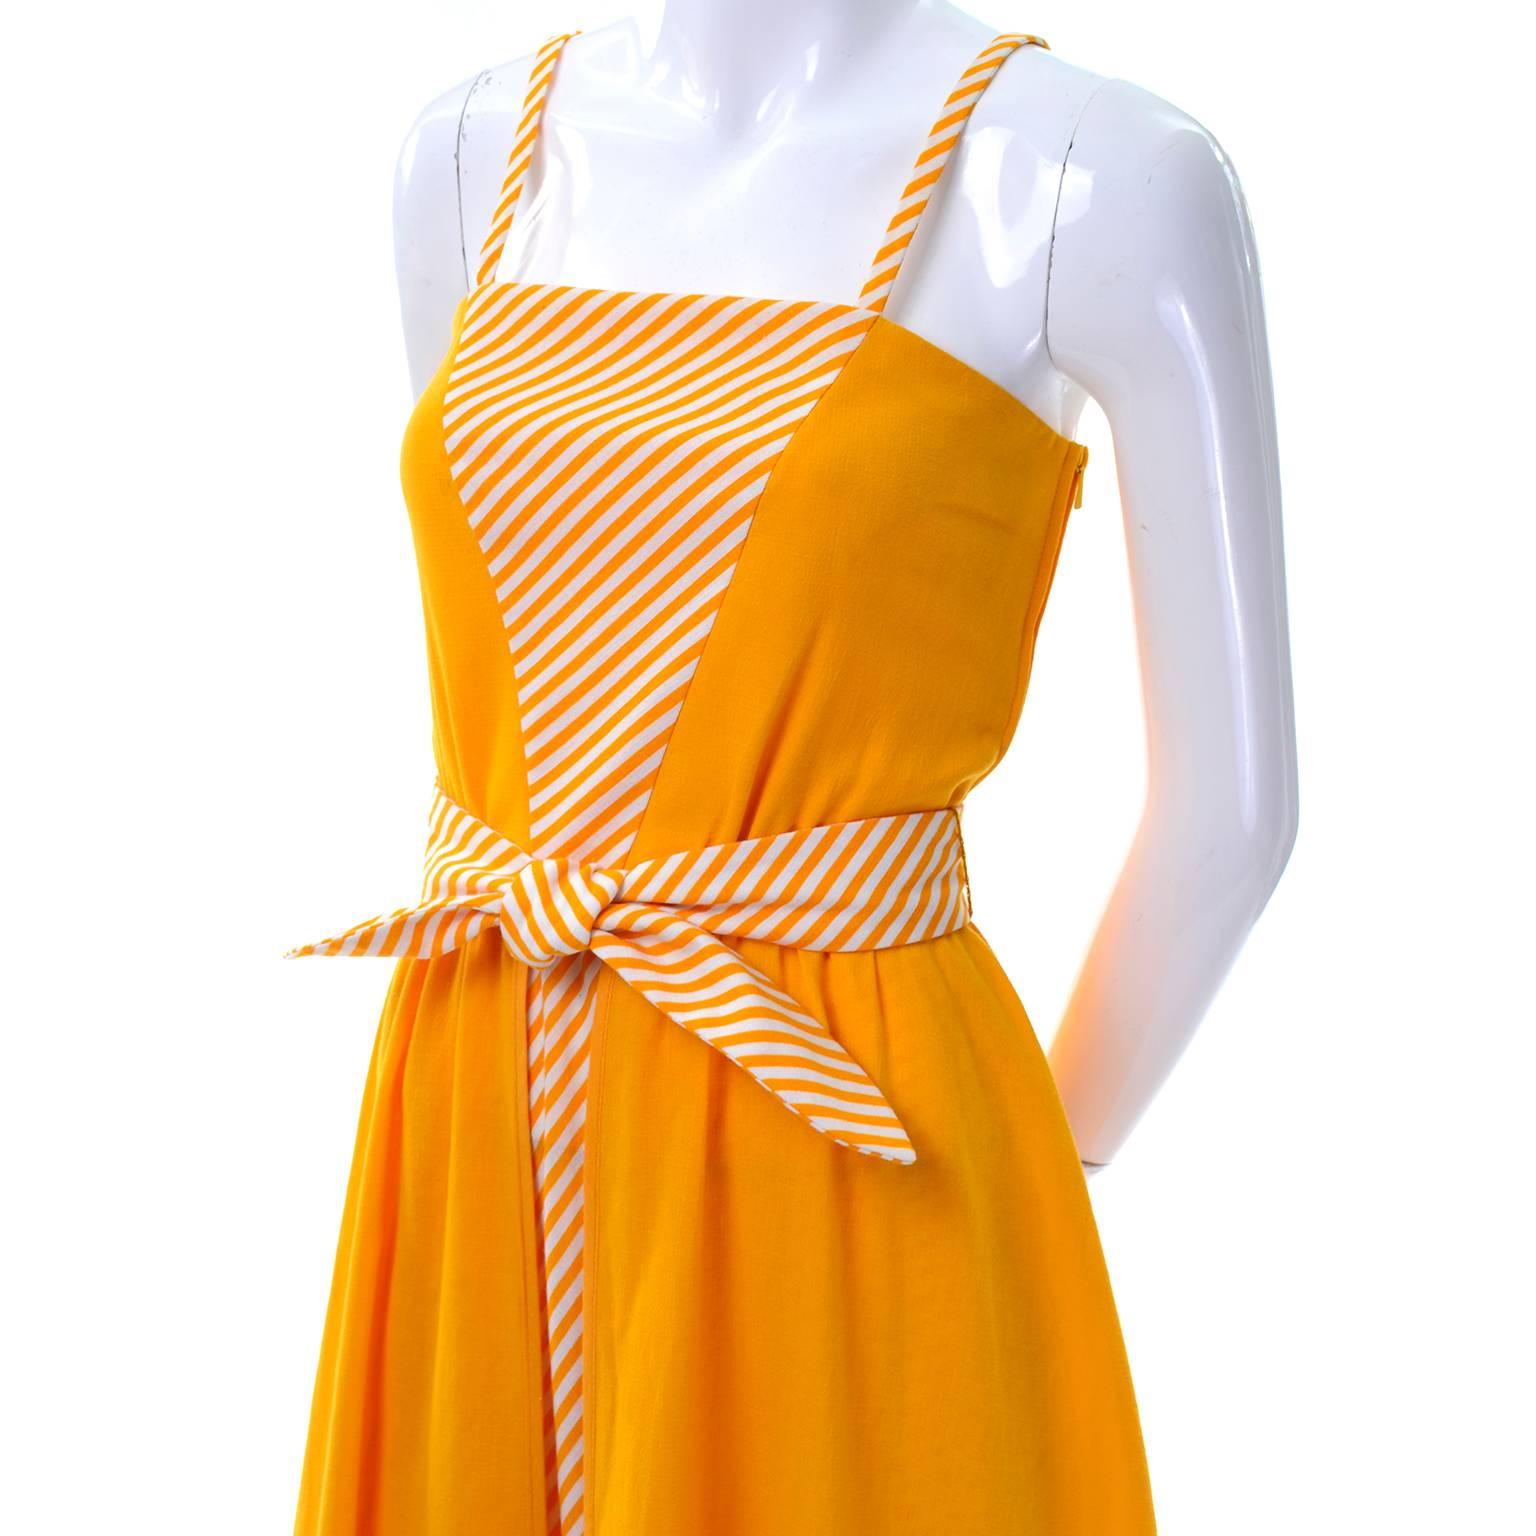 Women's Lanvin Dress Deadstock 1970s Marigold Yellow Striped Vintage Sundress w Tags For Sale